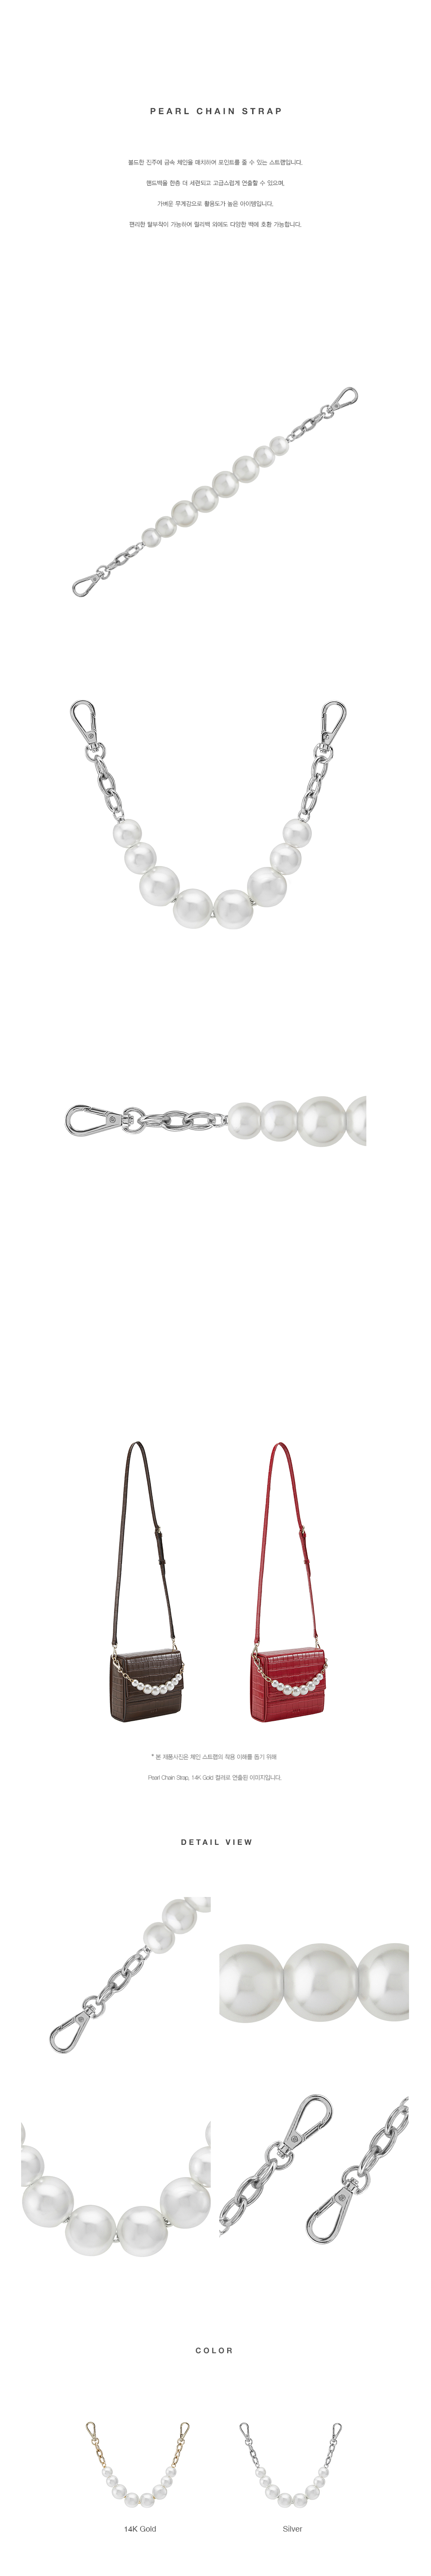 BBYB Pearl Chain strap (Silver)